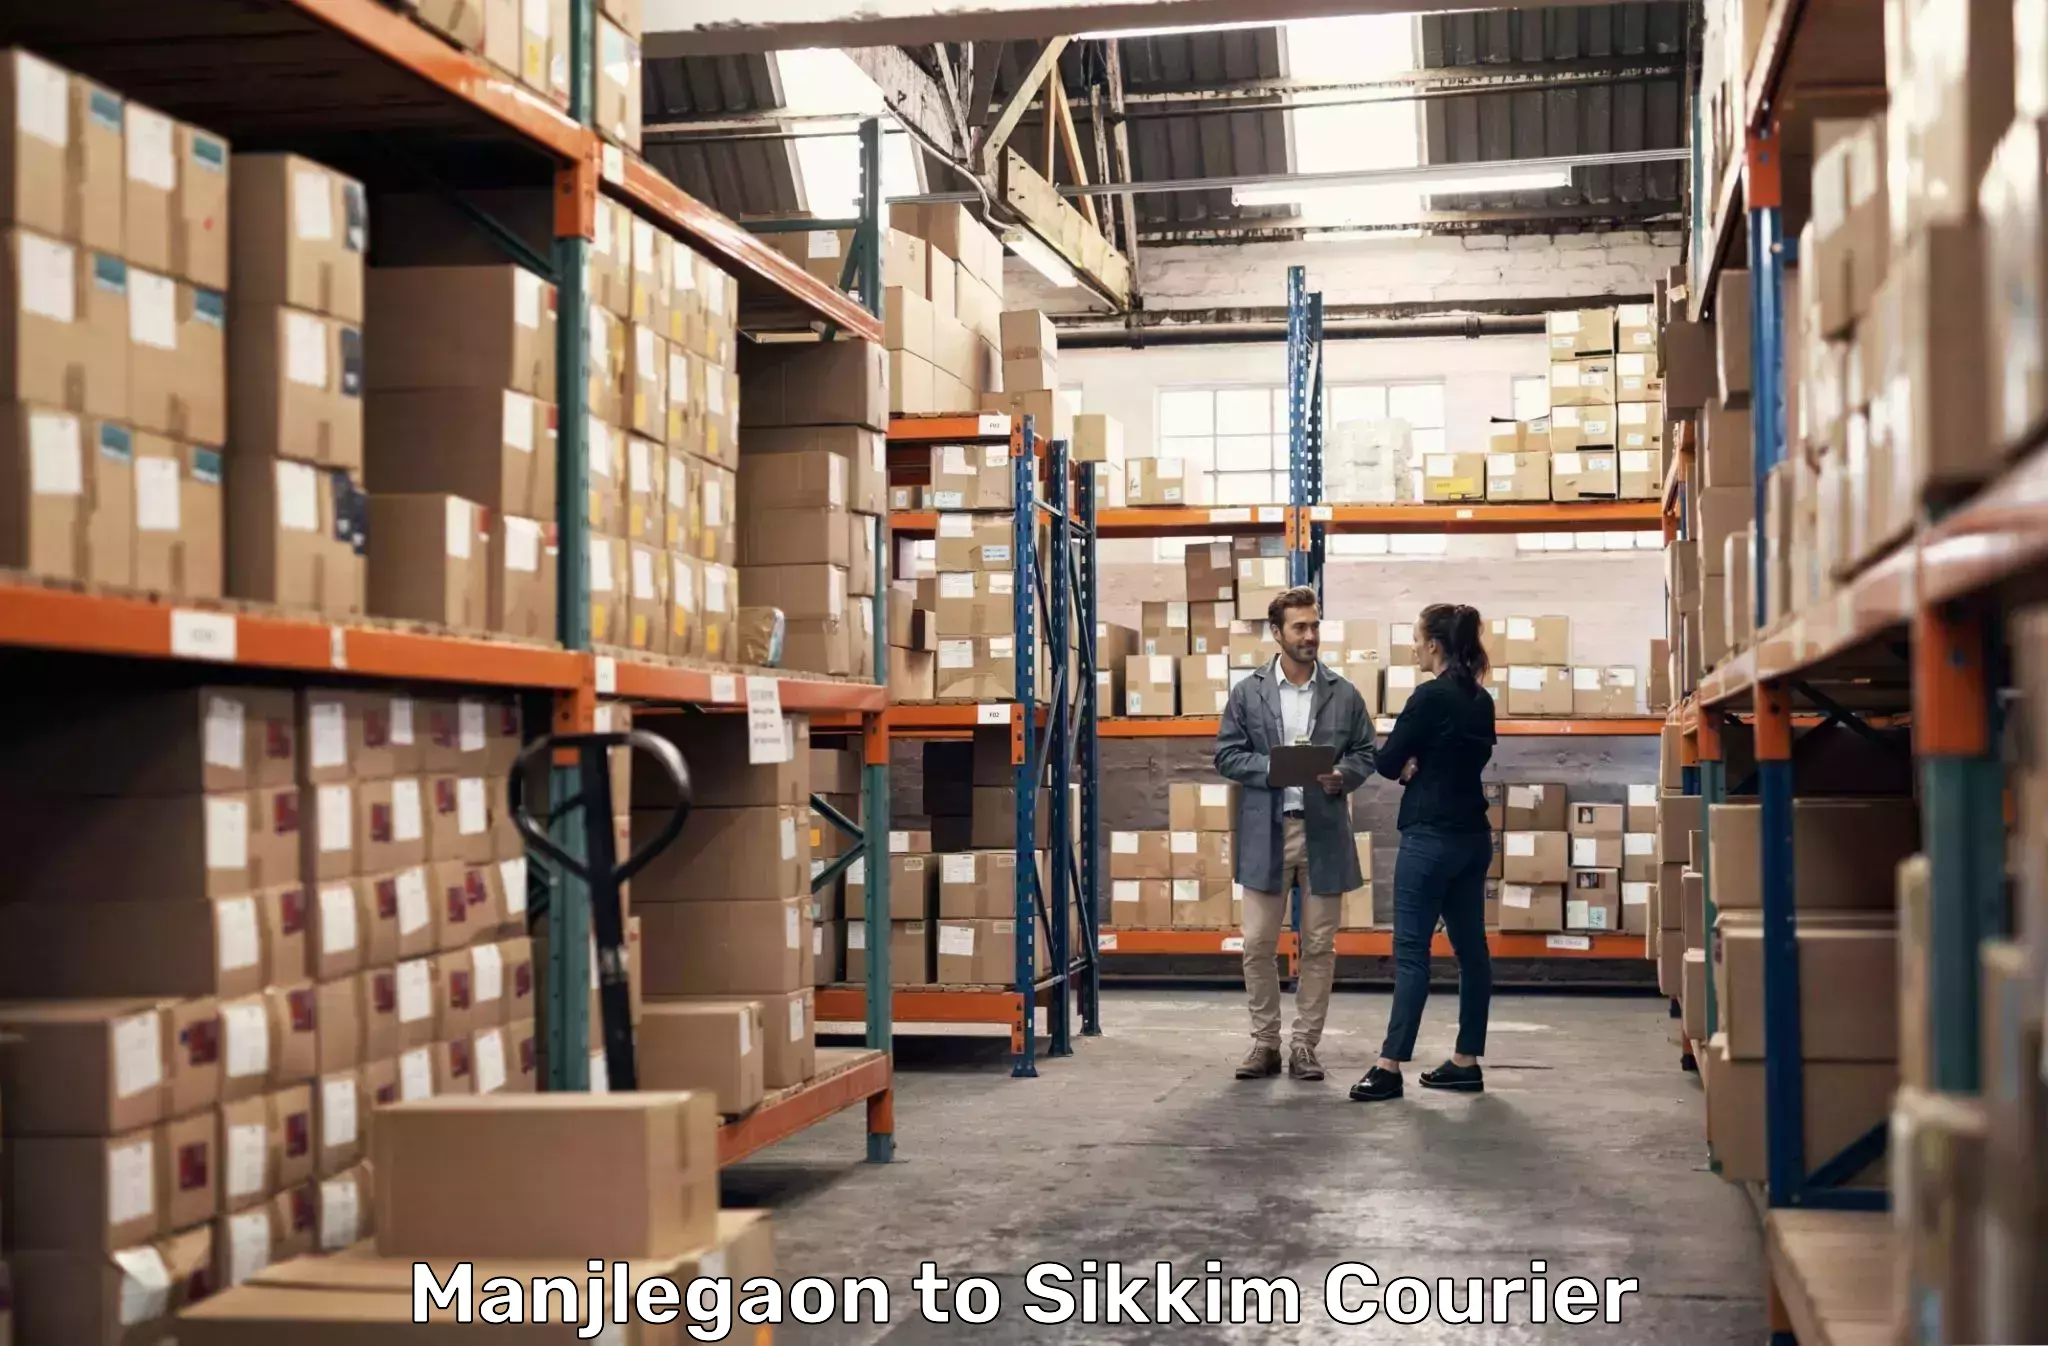 Cargo delivery service Manjlegaon to Mangan